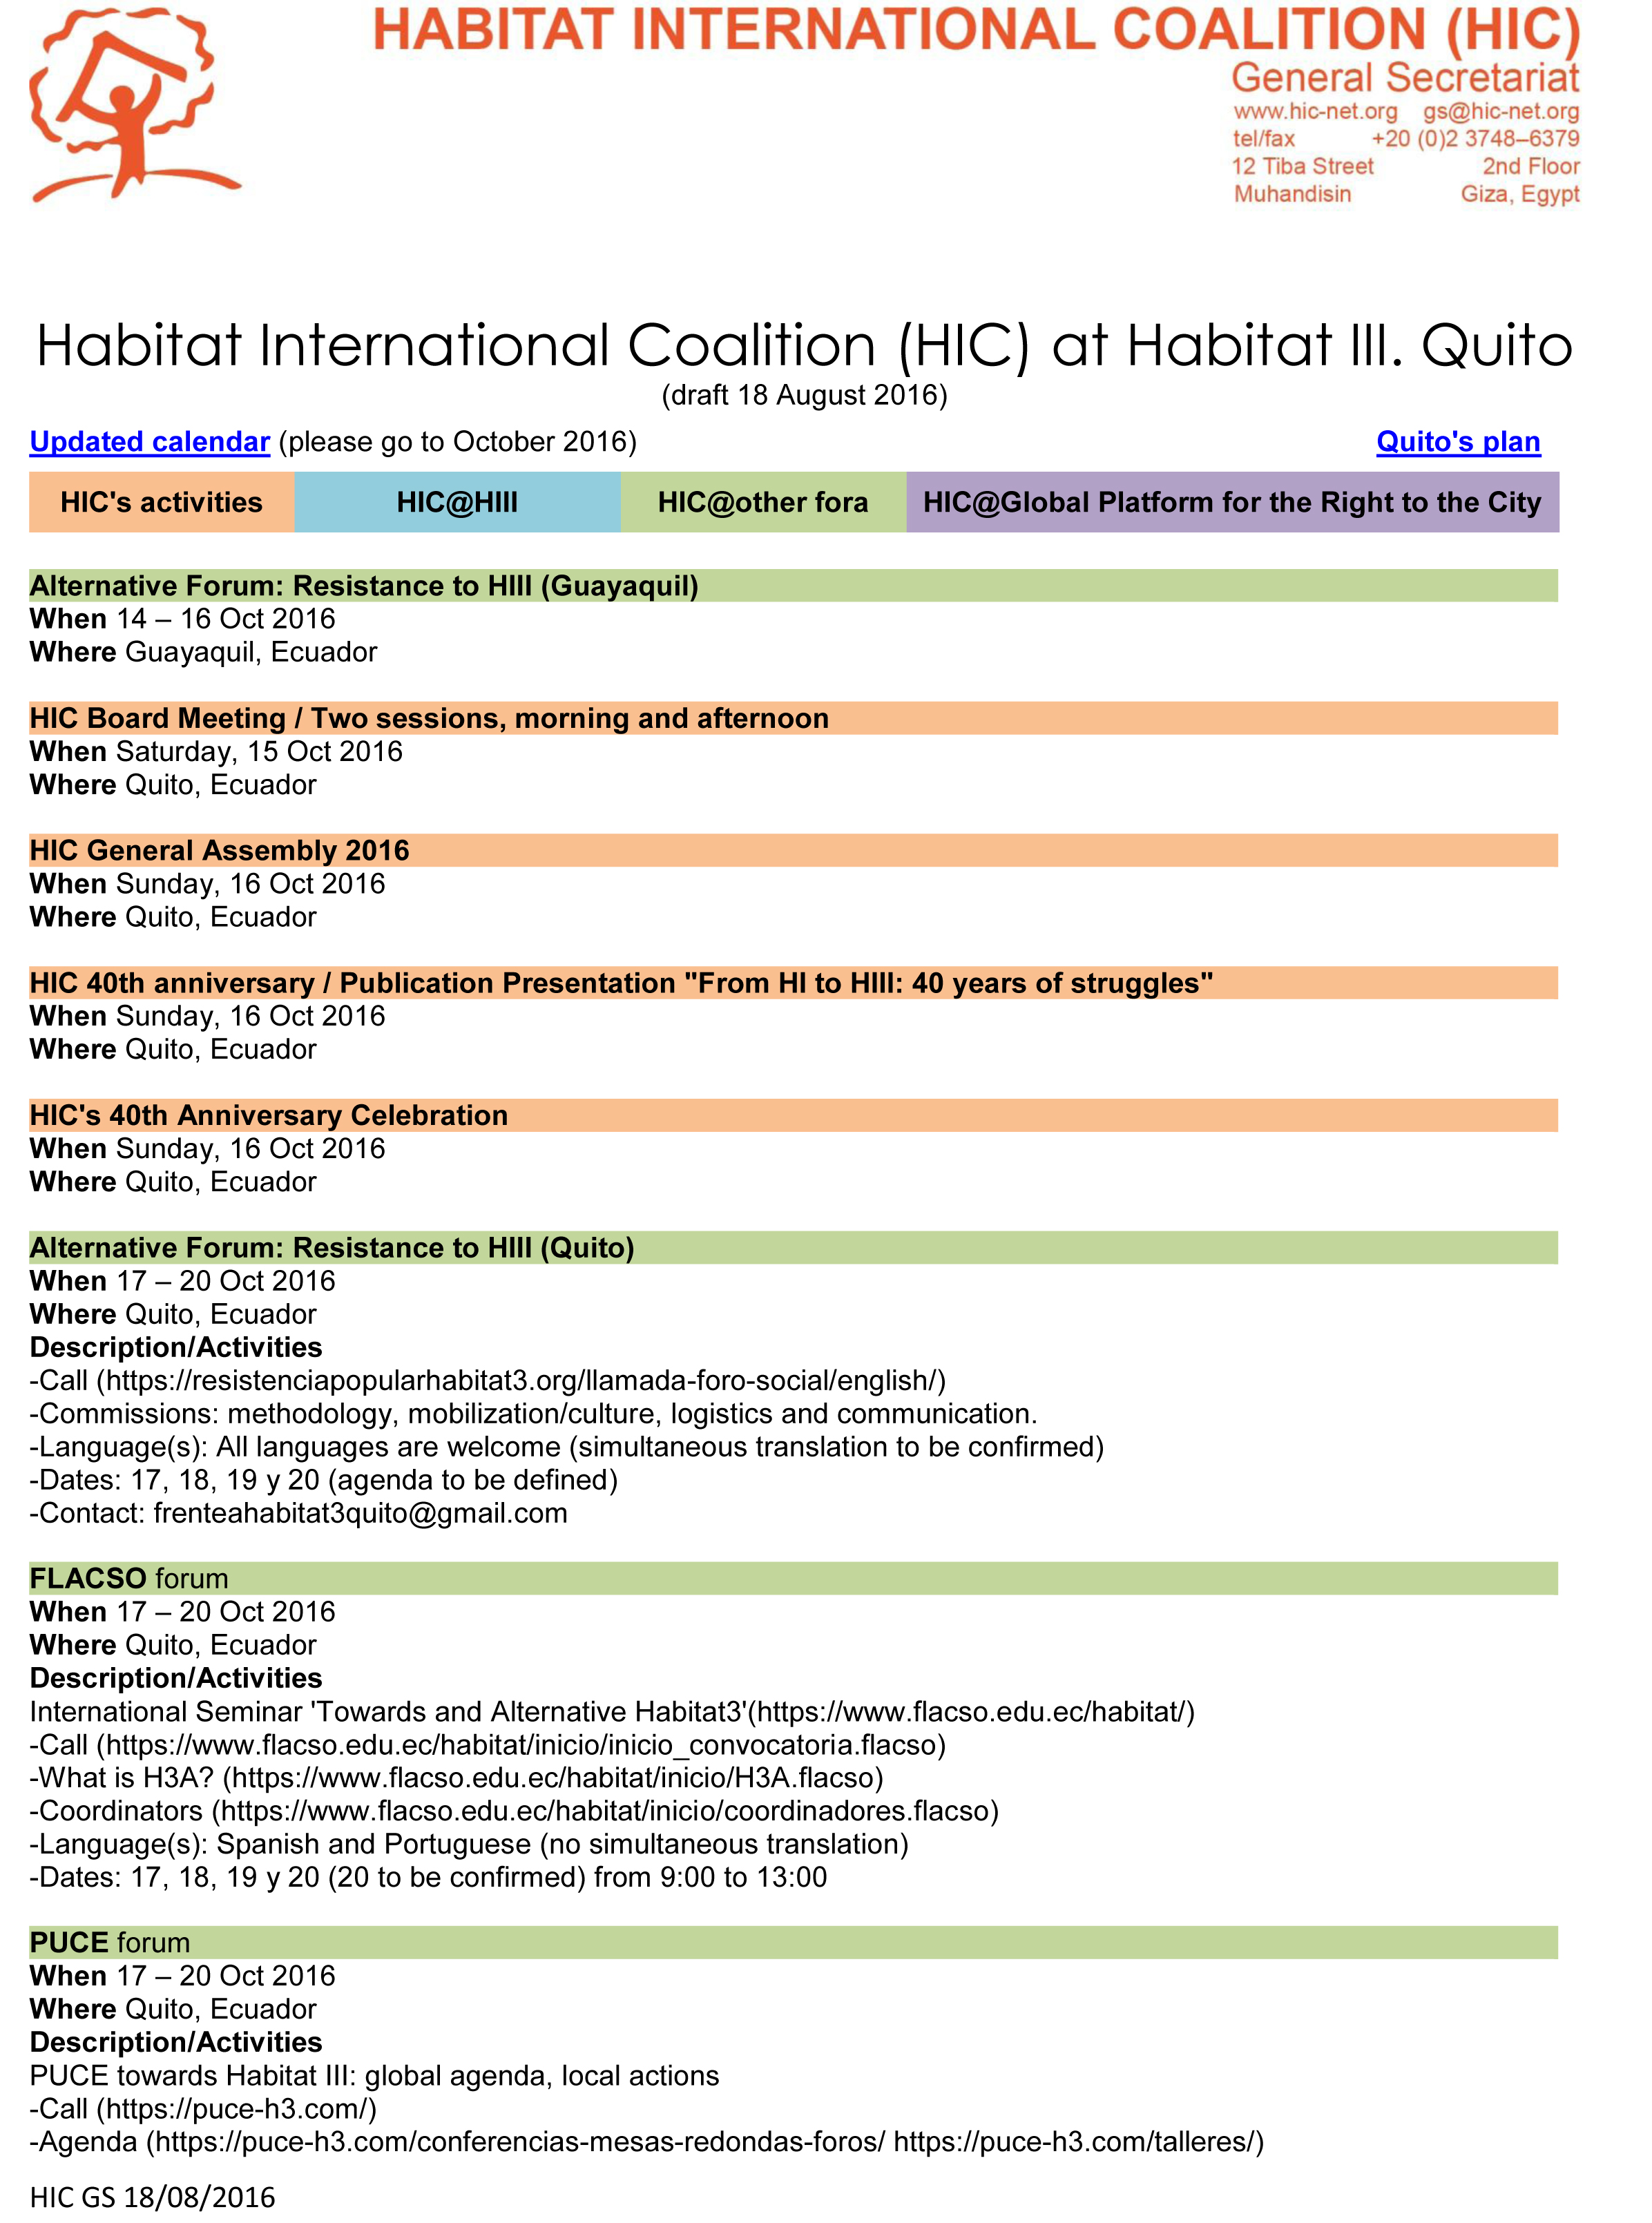 First draft of HIC agenda during Habitat III